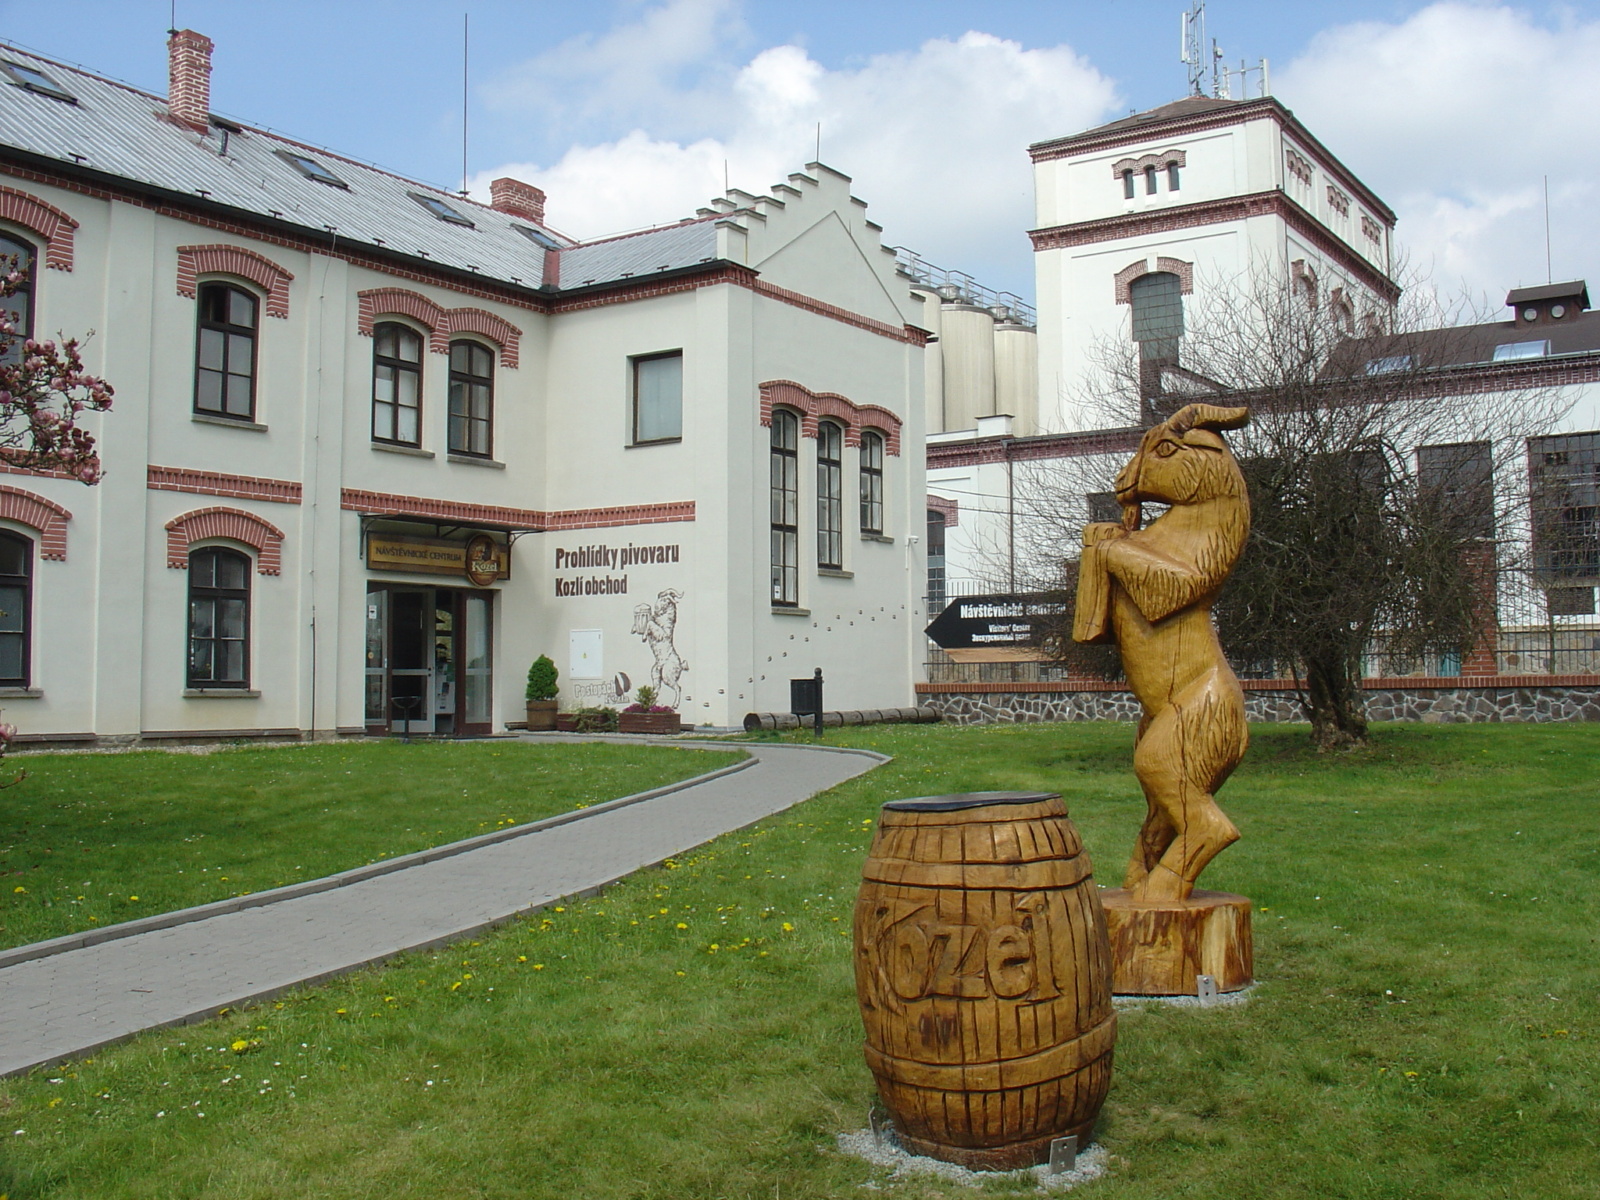 Velke Popovice Brewery - courtyard